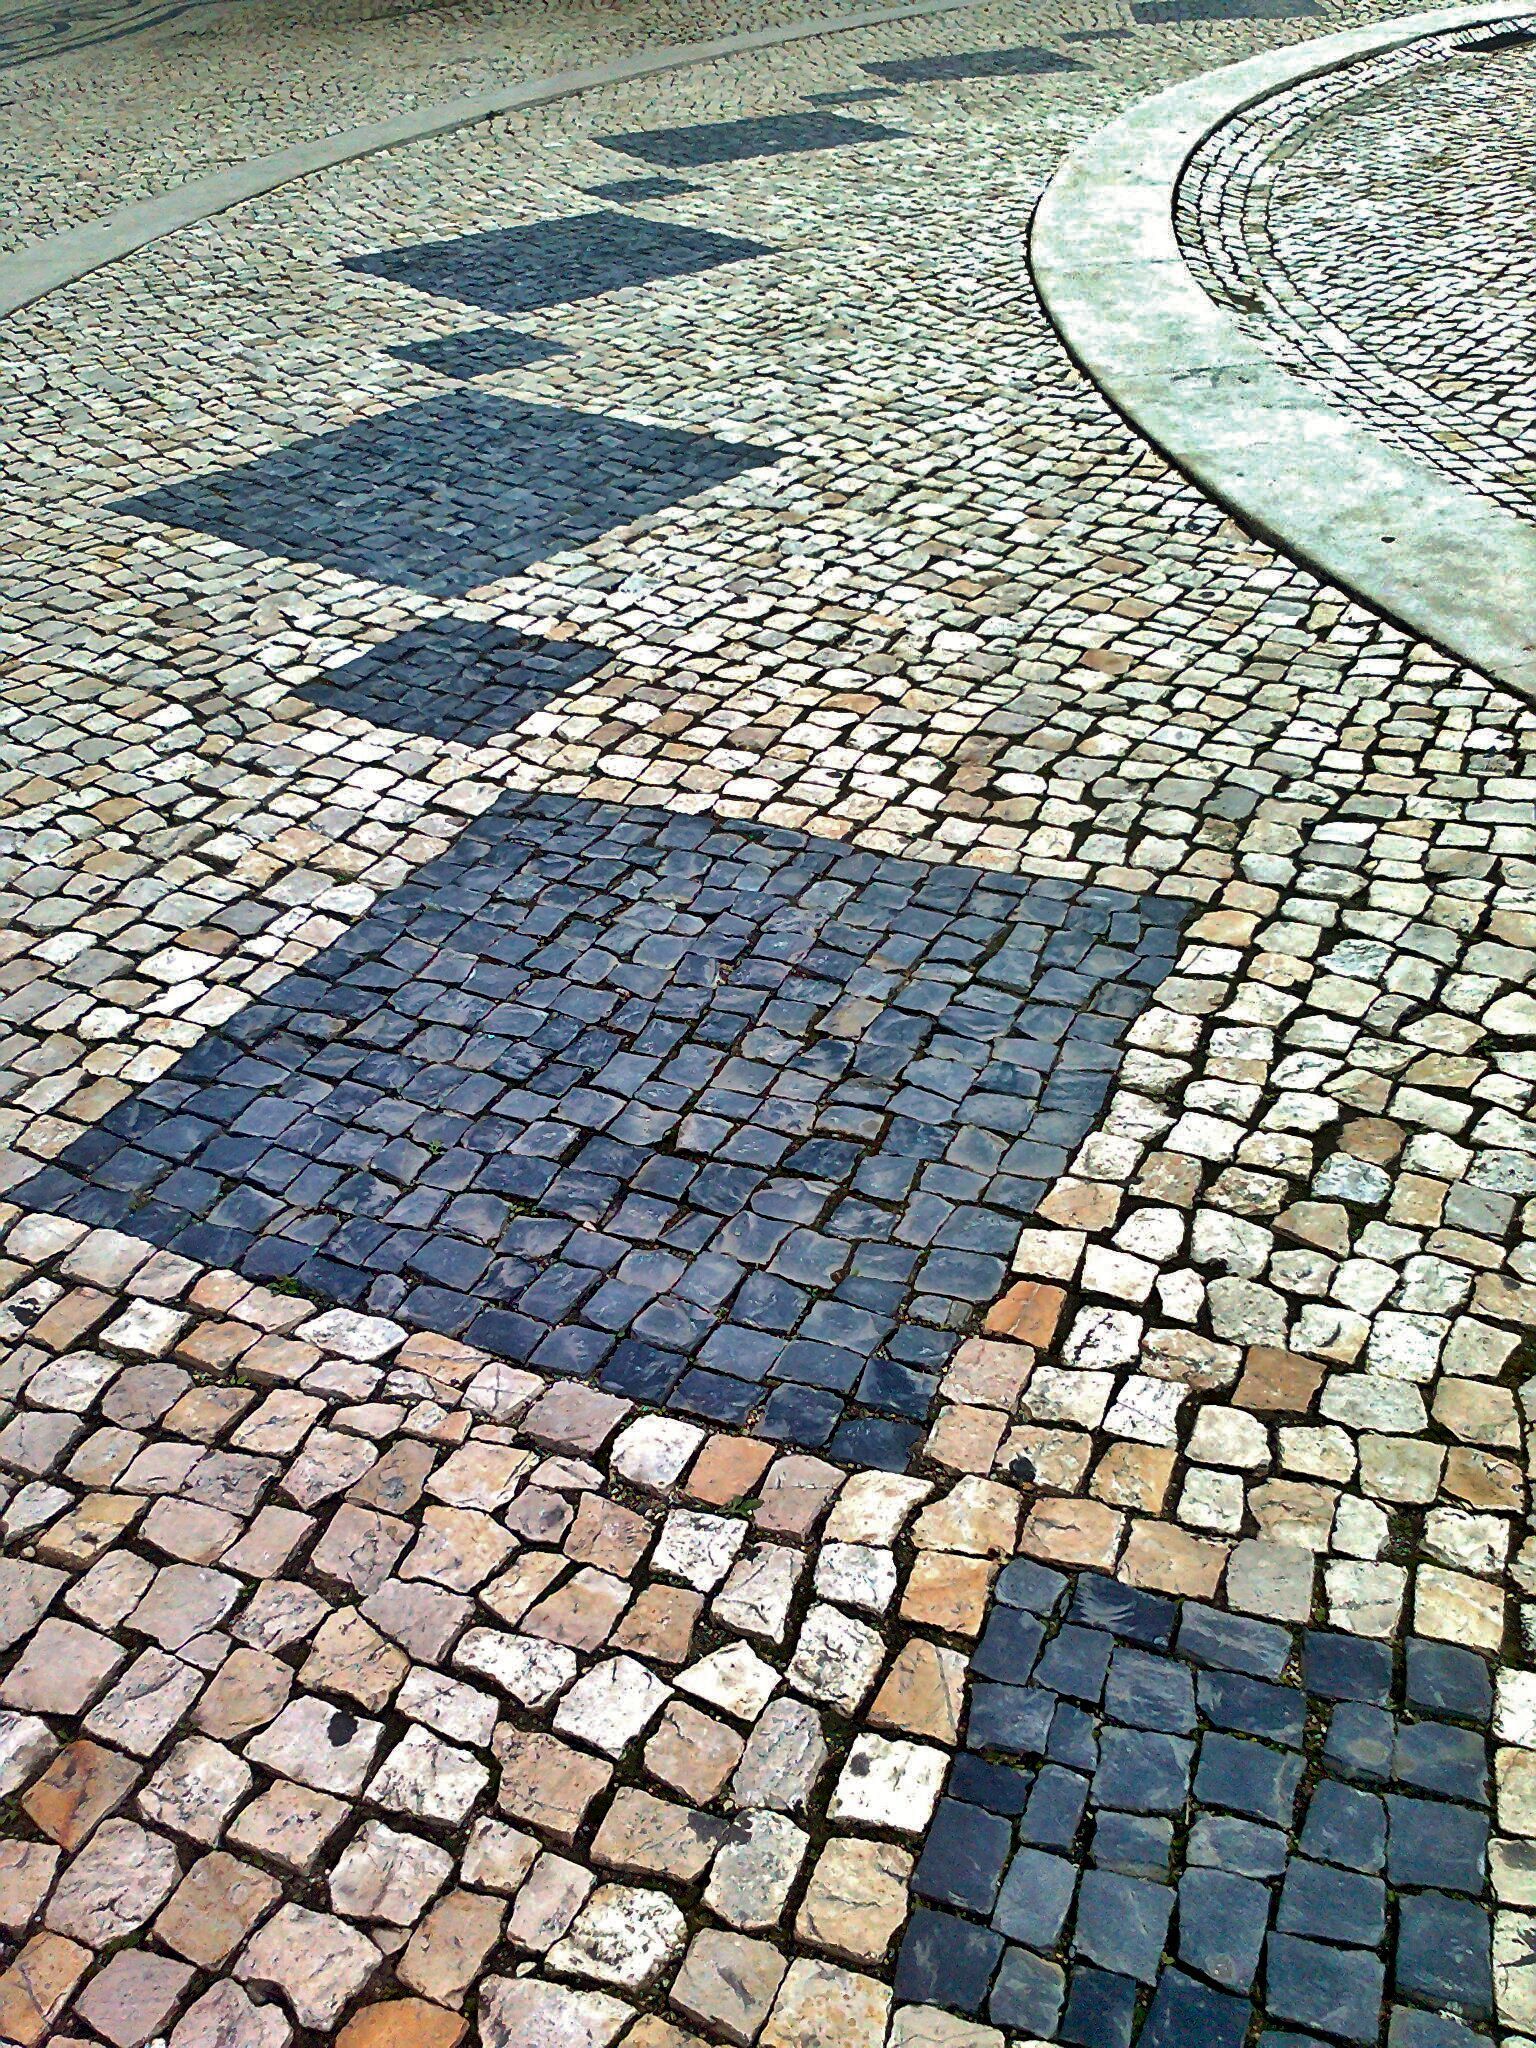 The famous Portuguese cobblestone pavement (